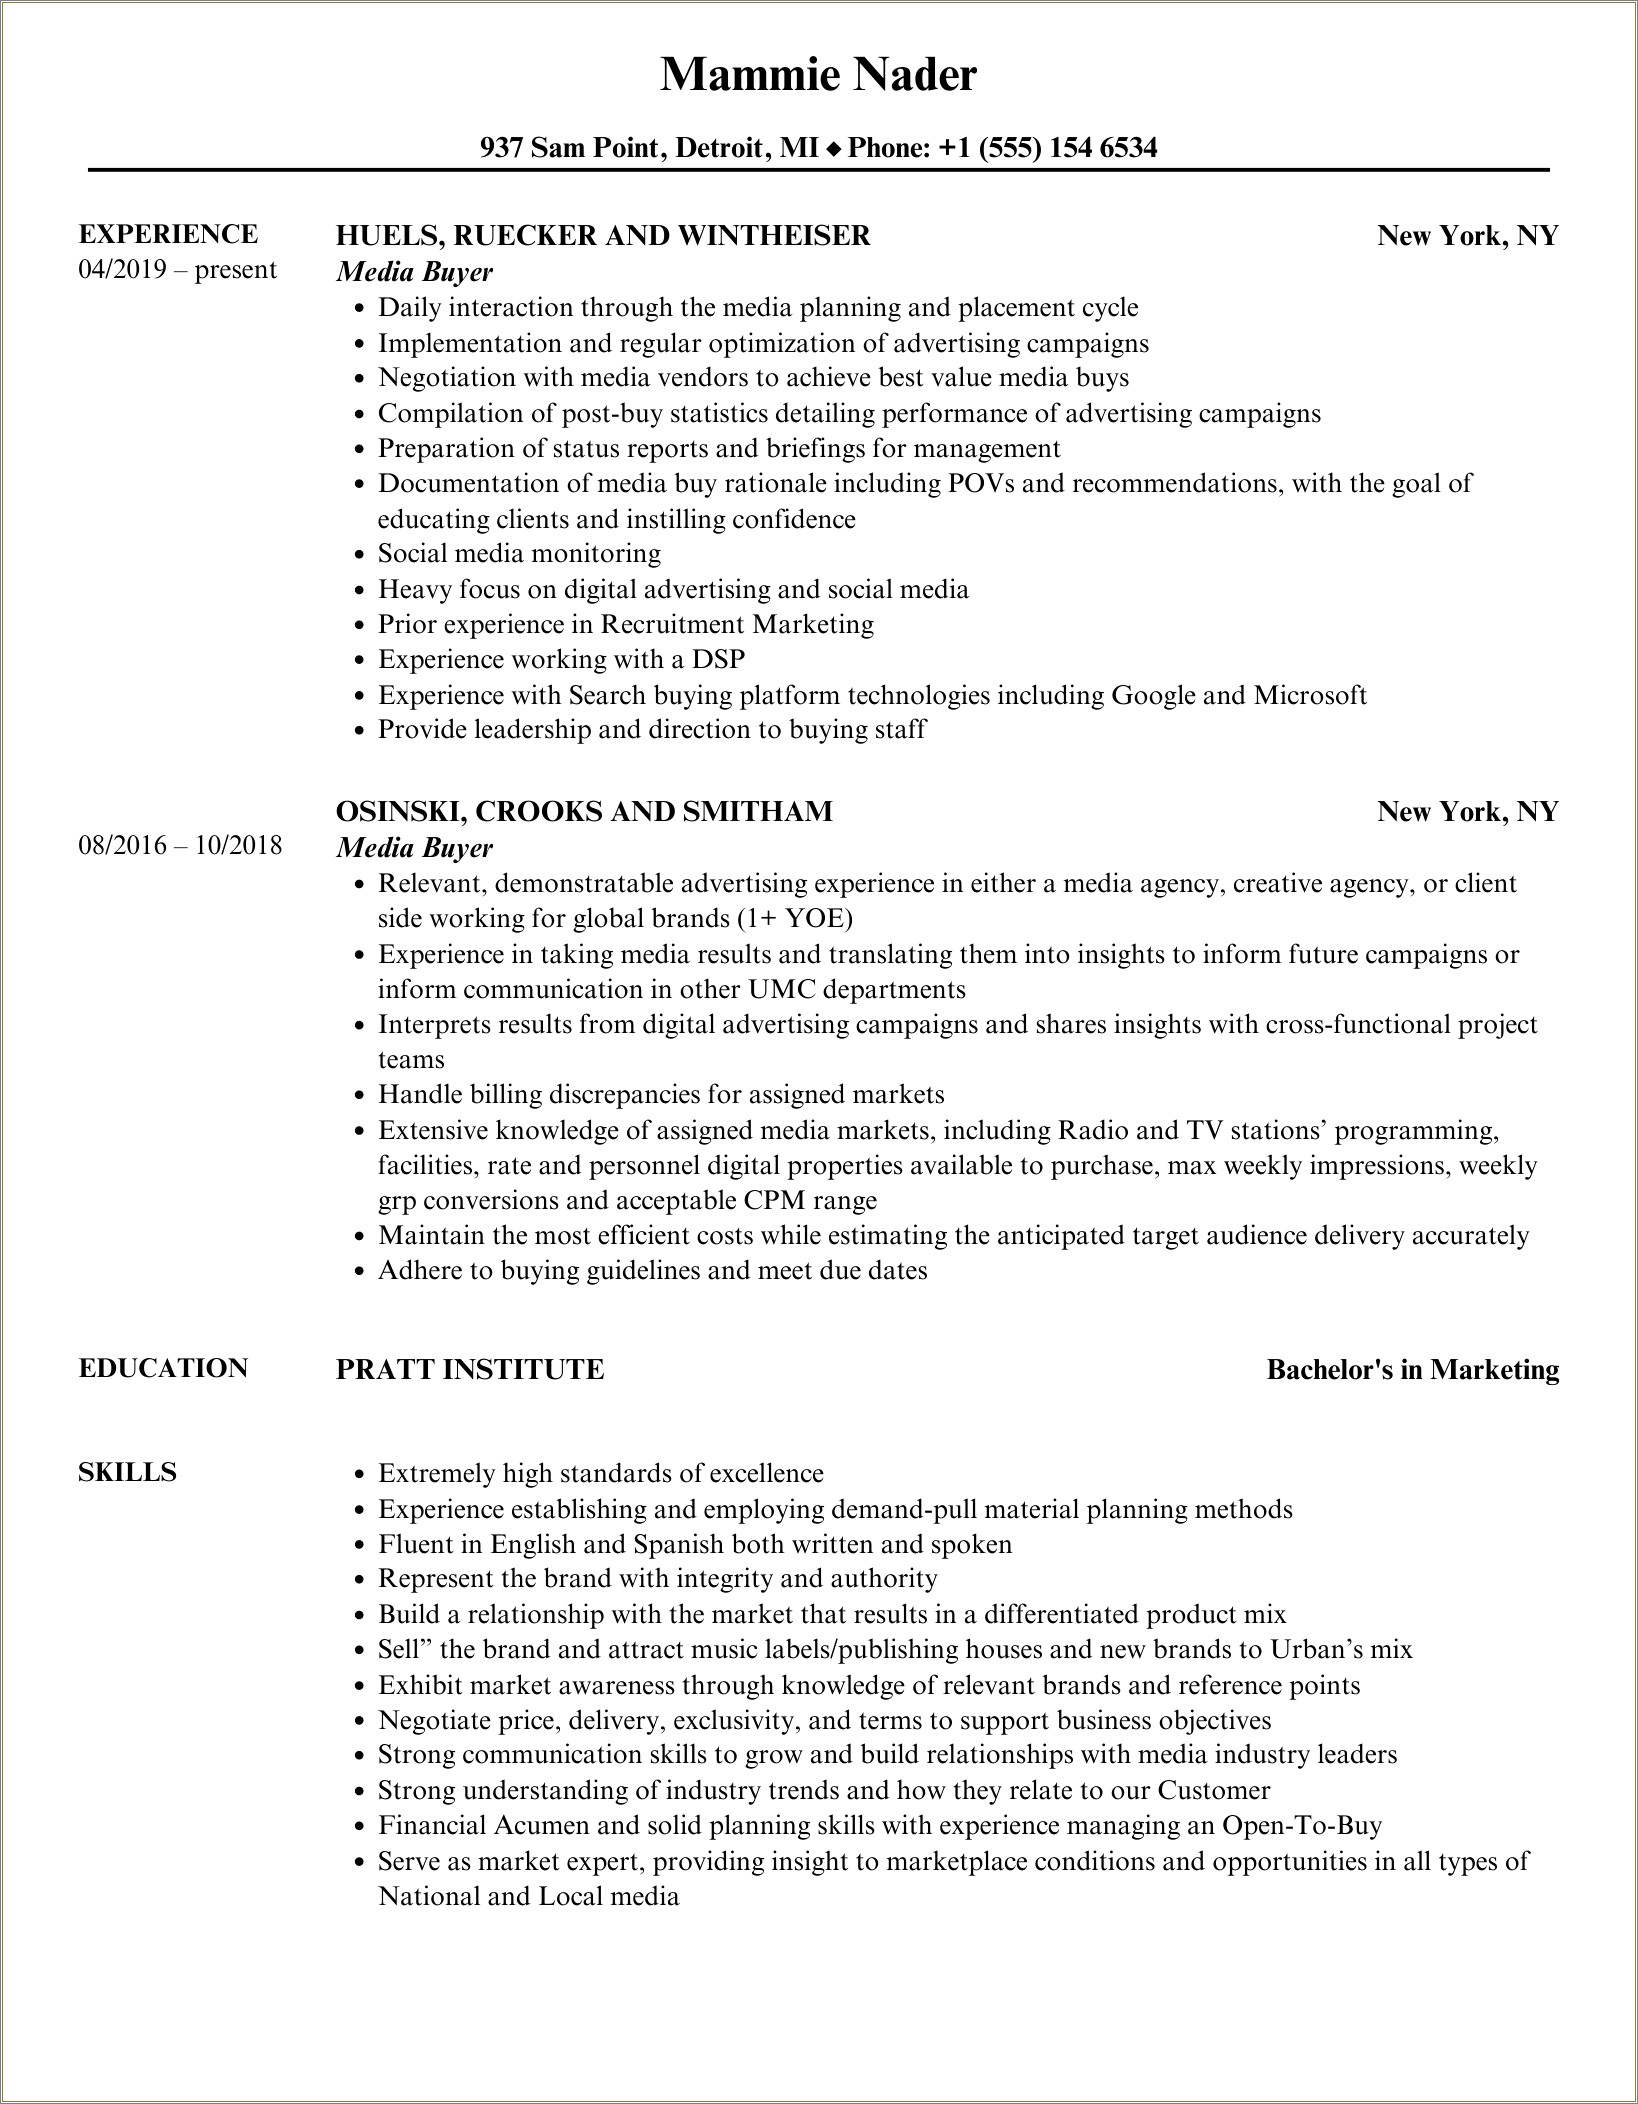 Media Buyer Job Description For Resume